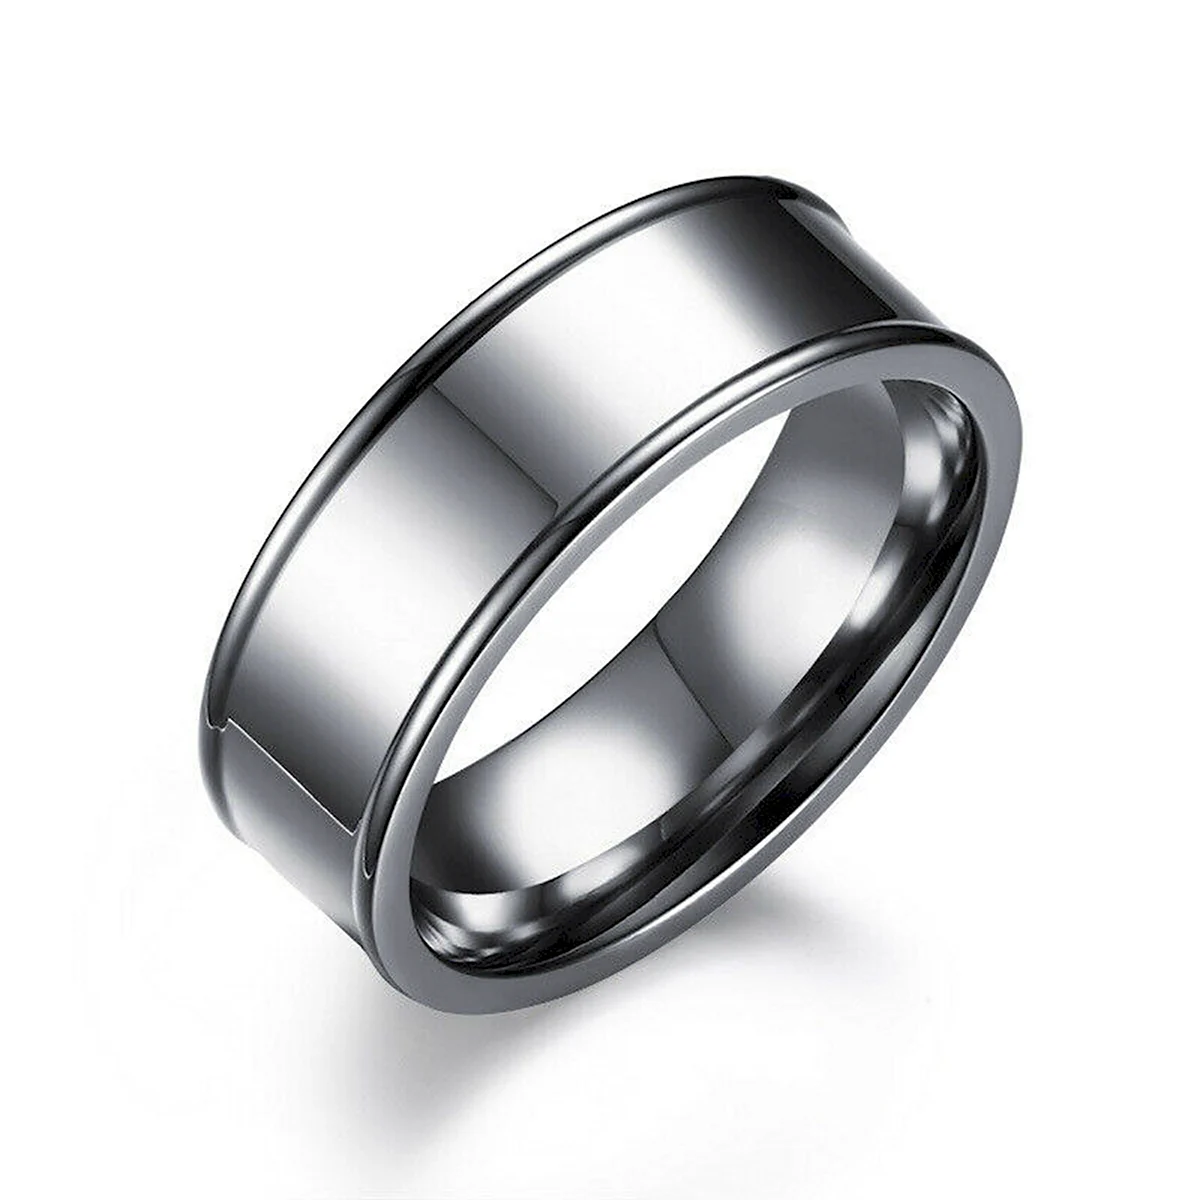 Stainless Steel кольцо